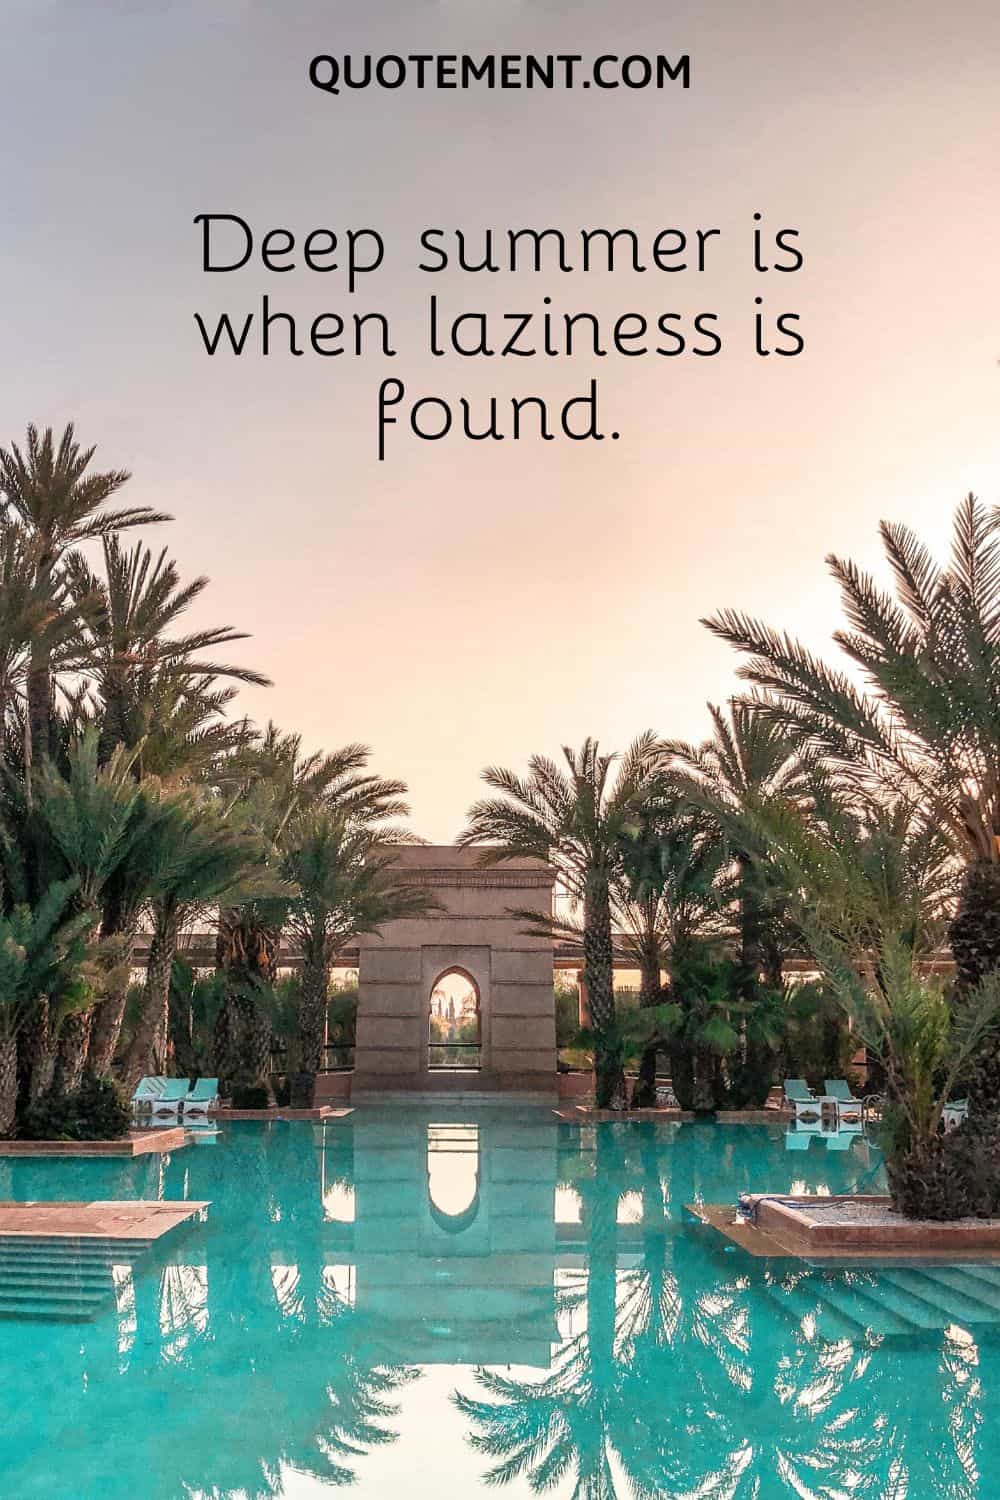 Deep summer is when laziness is found.